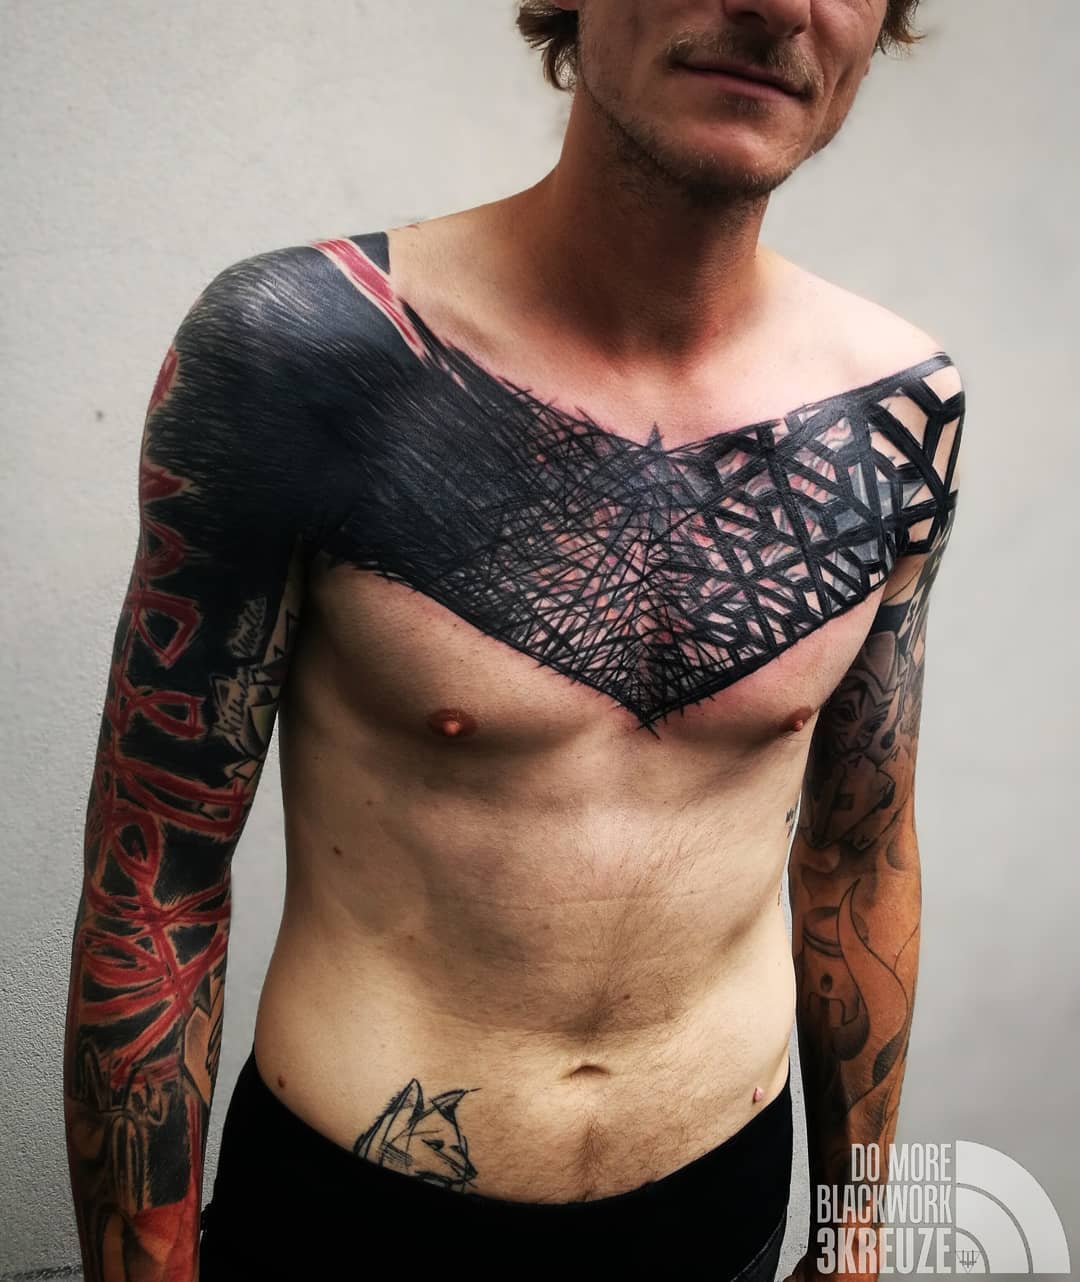 3KREUZE's brutal heavy abstract blackwork tattoo | iNKPPL